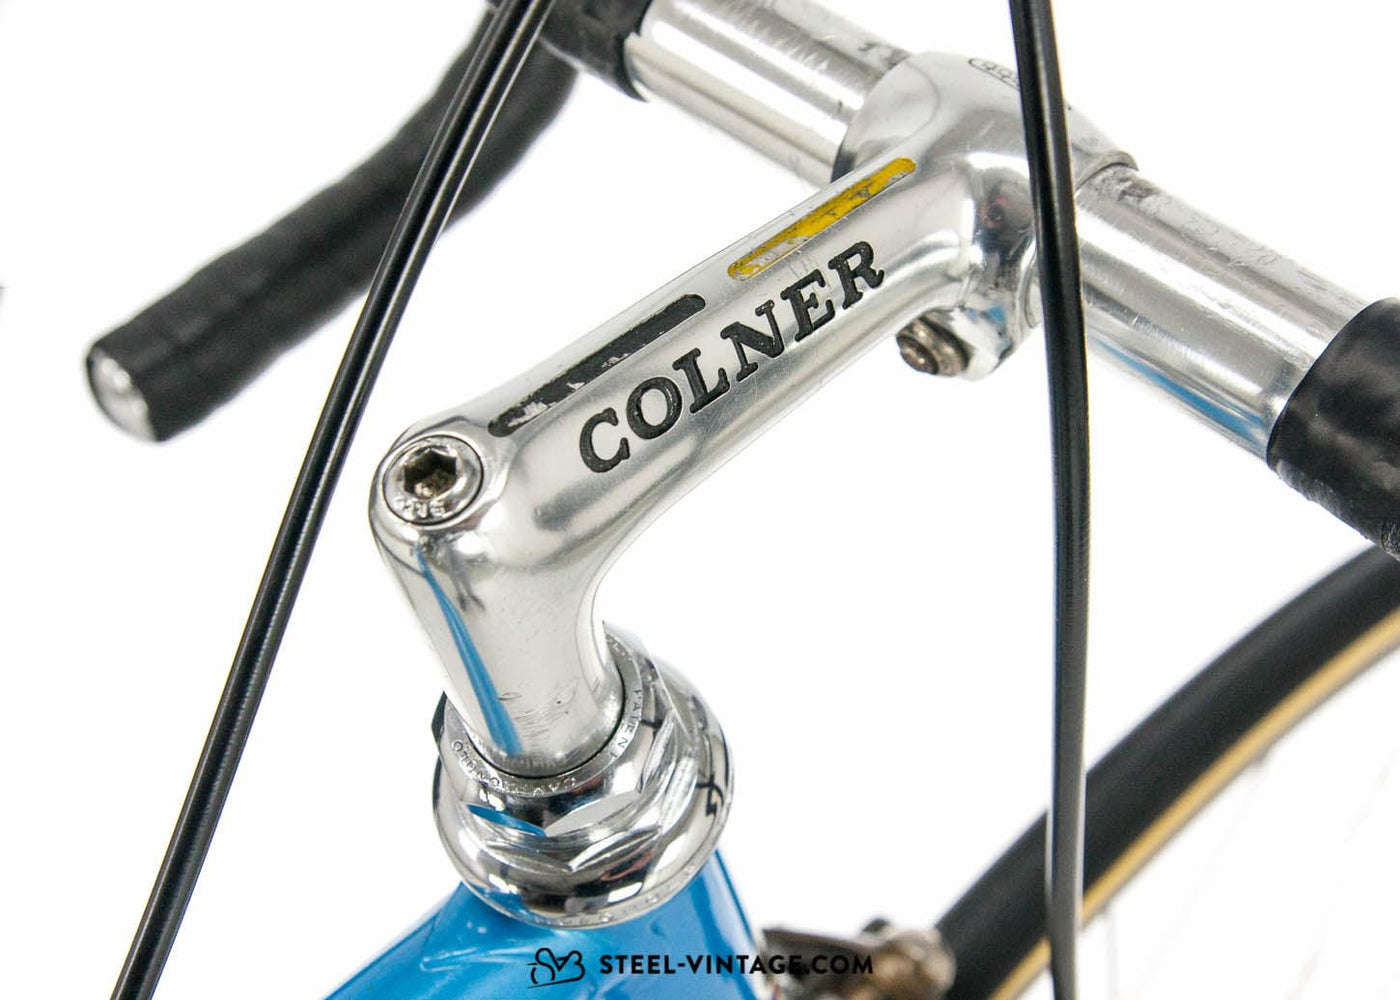 Colner Extra SL Eroica Road Bike 1982 - Steel Vintage Bikes